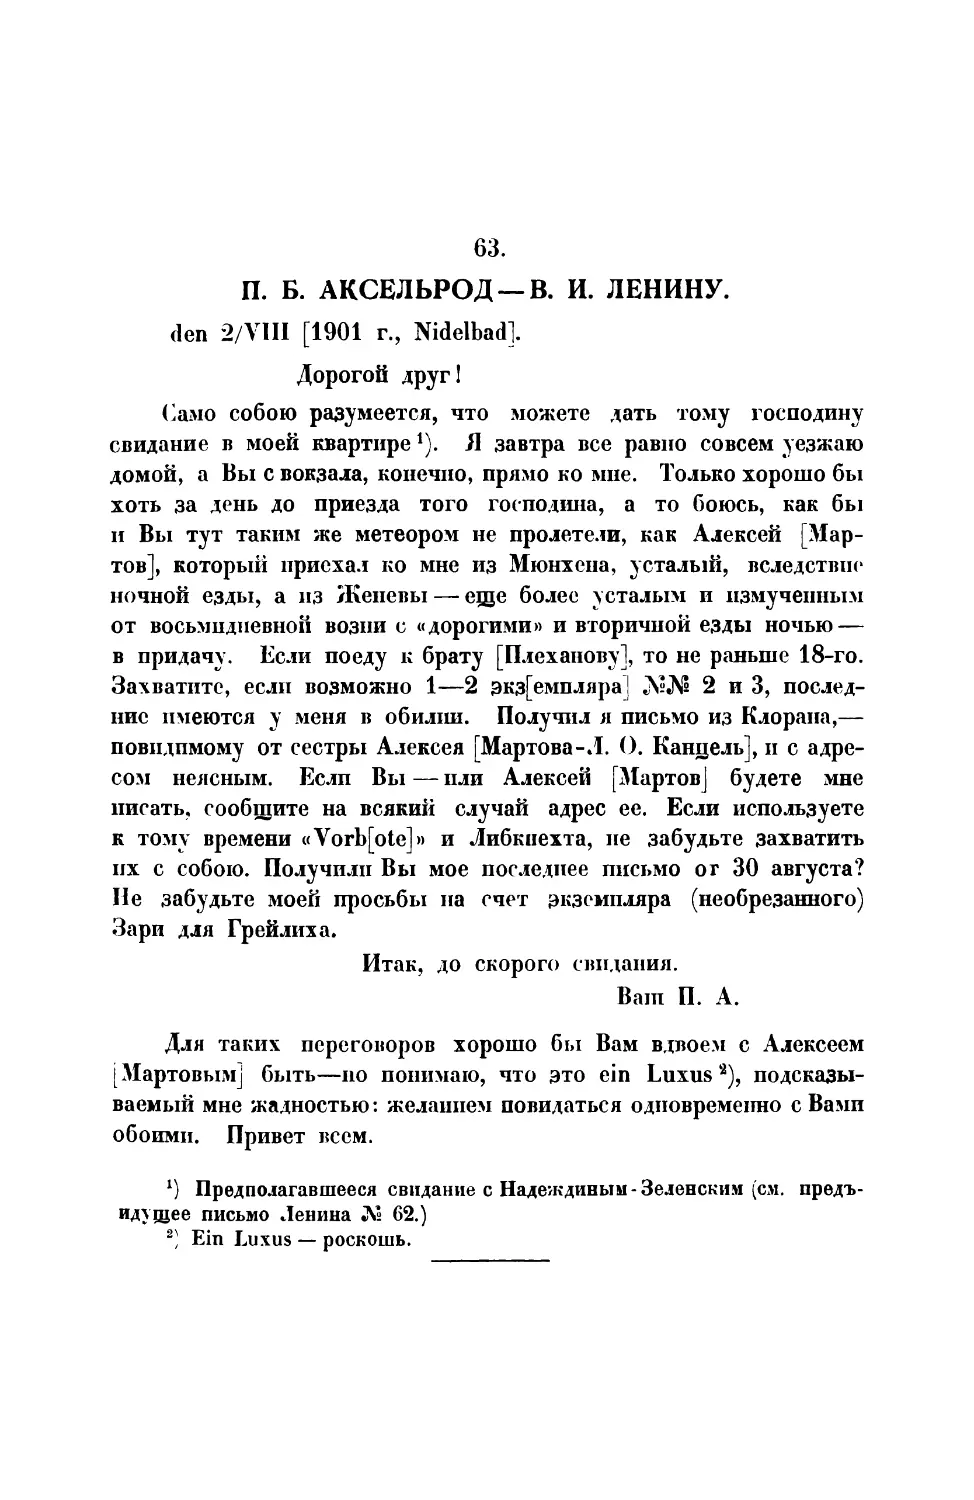 63. П. Б. А к с е л ь р о д. — Письмо В. И. Ленину от 2 VIII 1901 г.